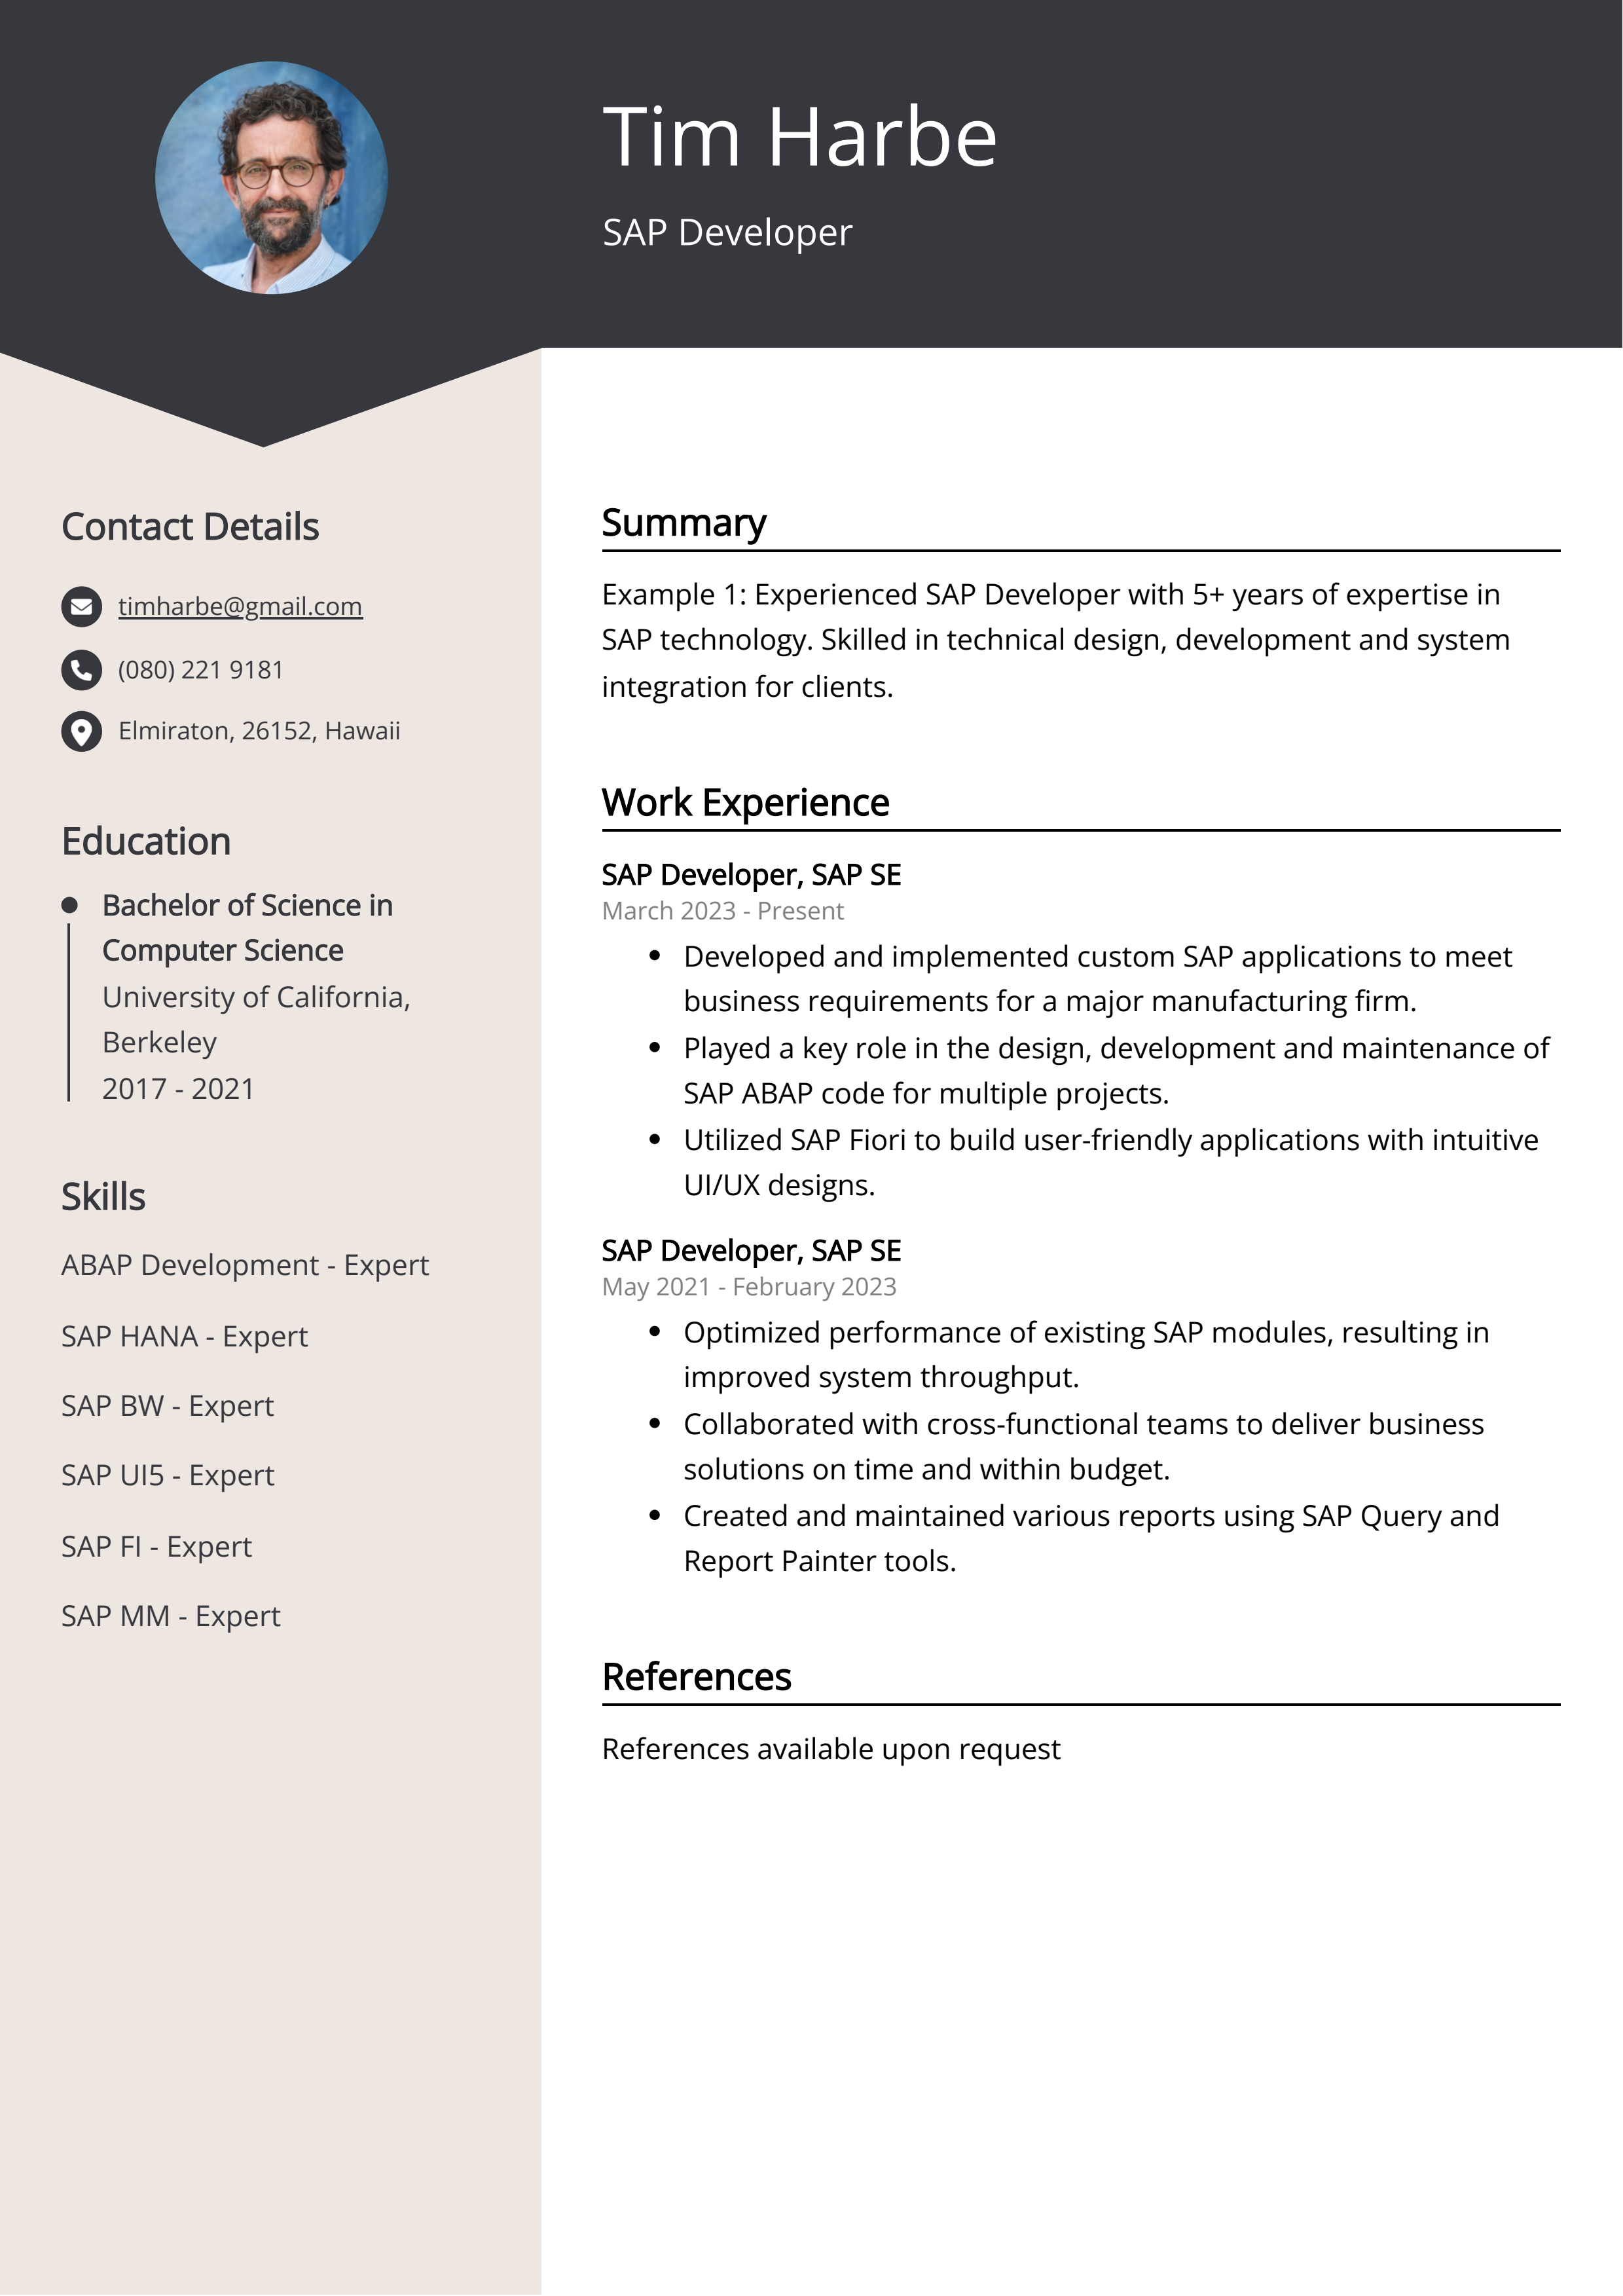 SAP Developer CV Example